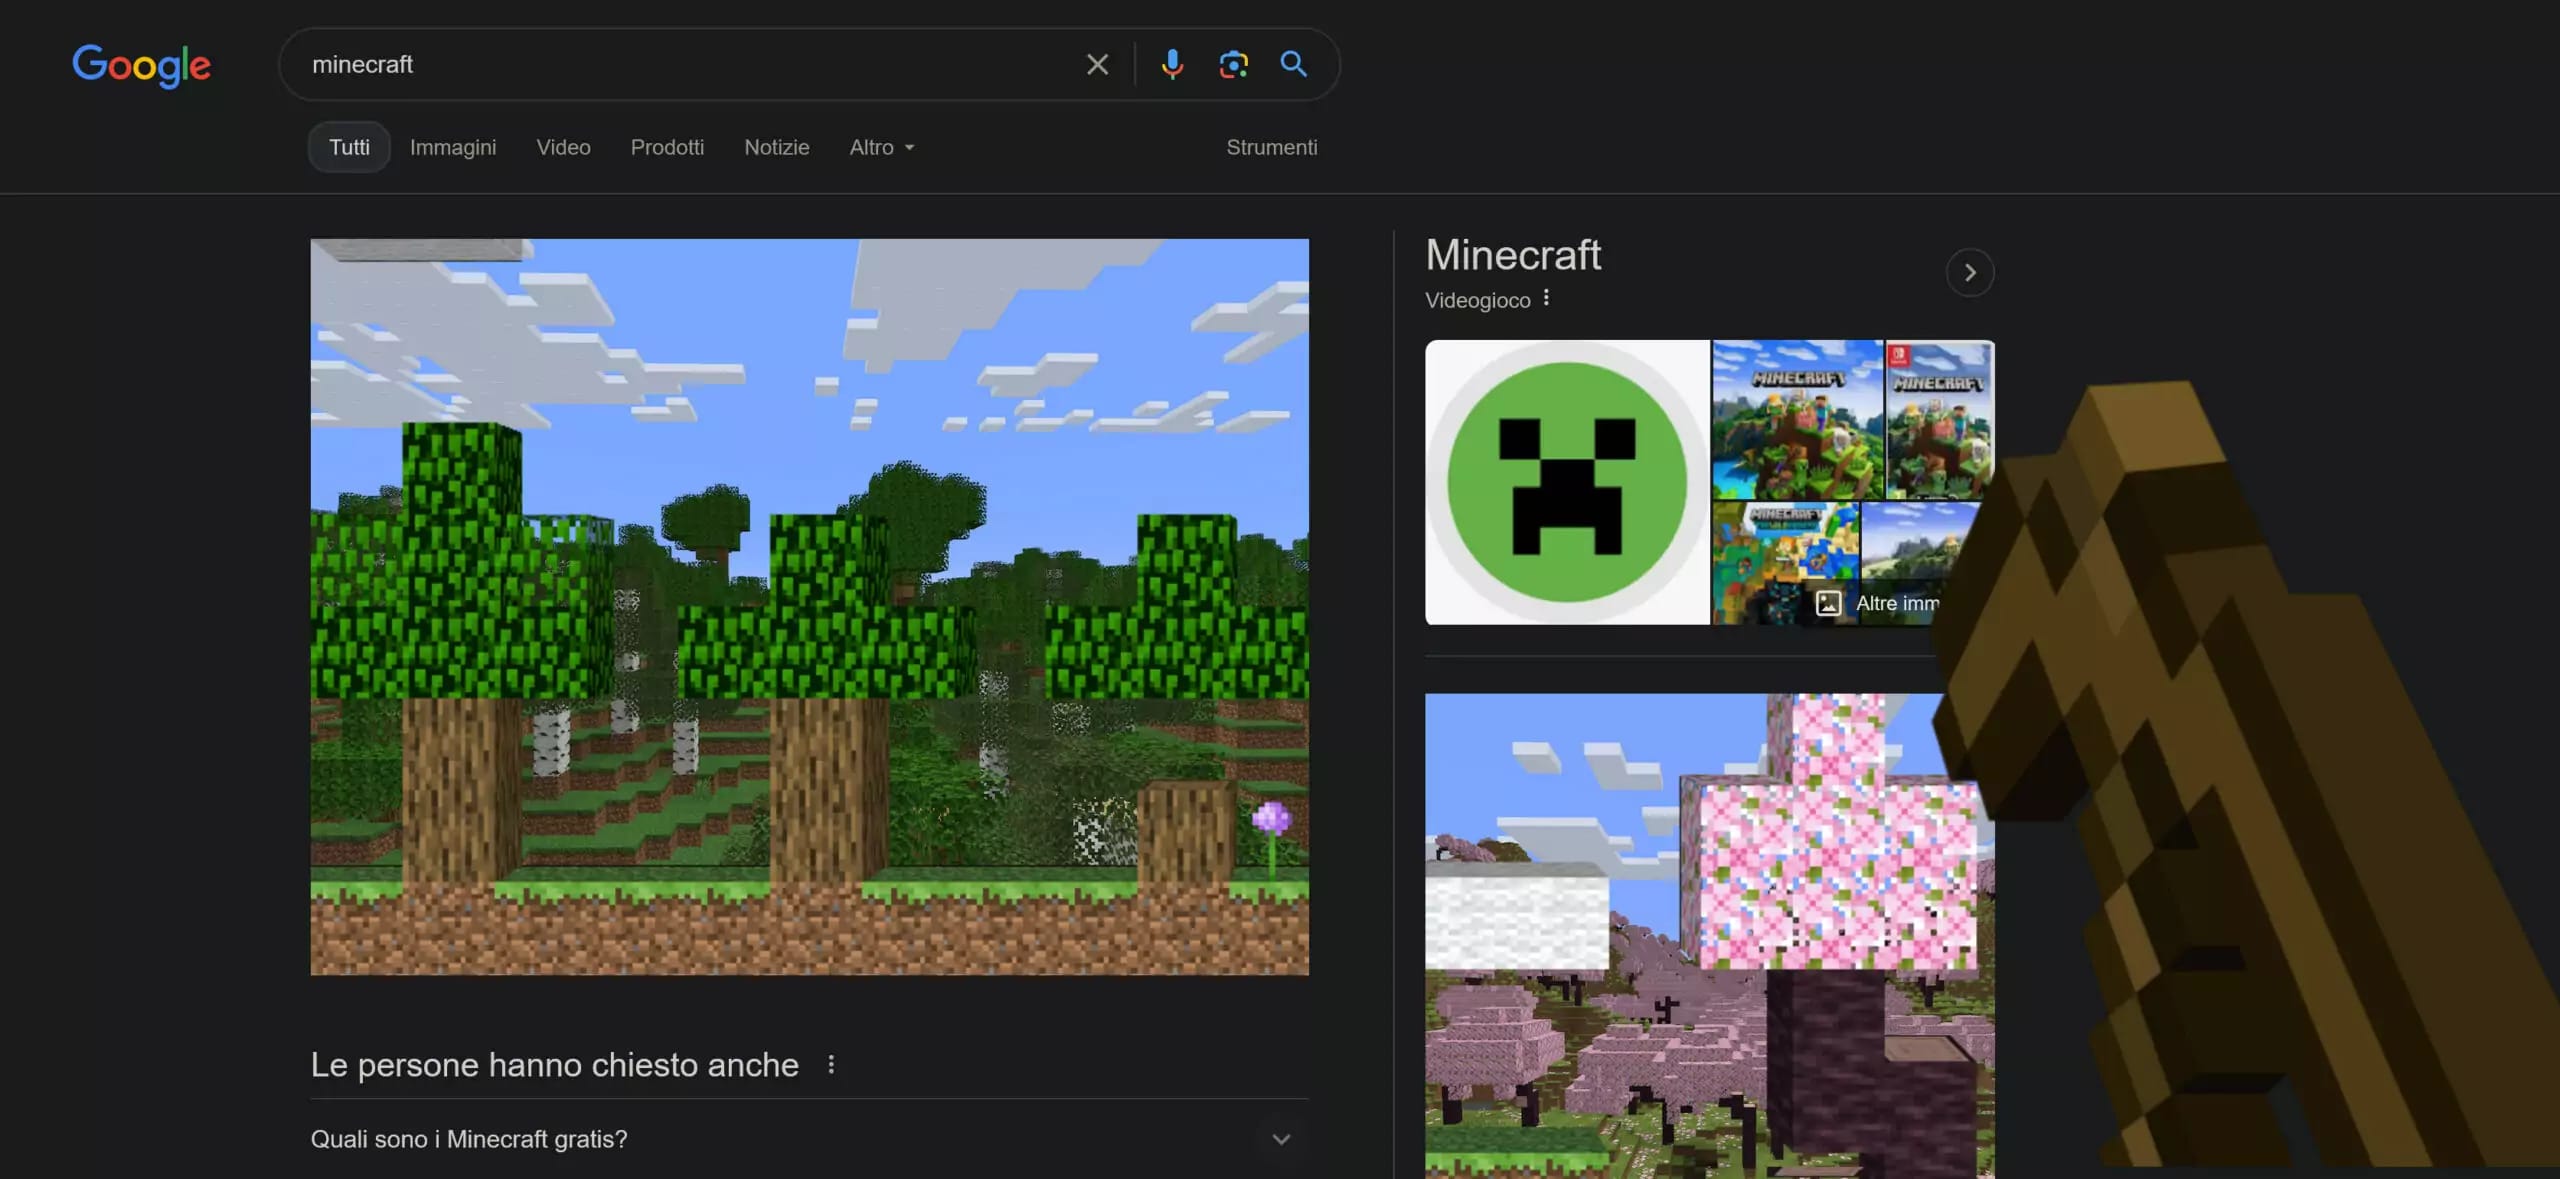 Minecraft giocabile su Google!